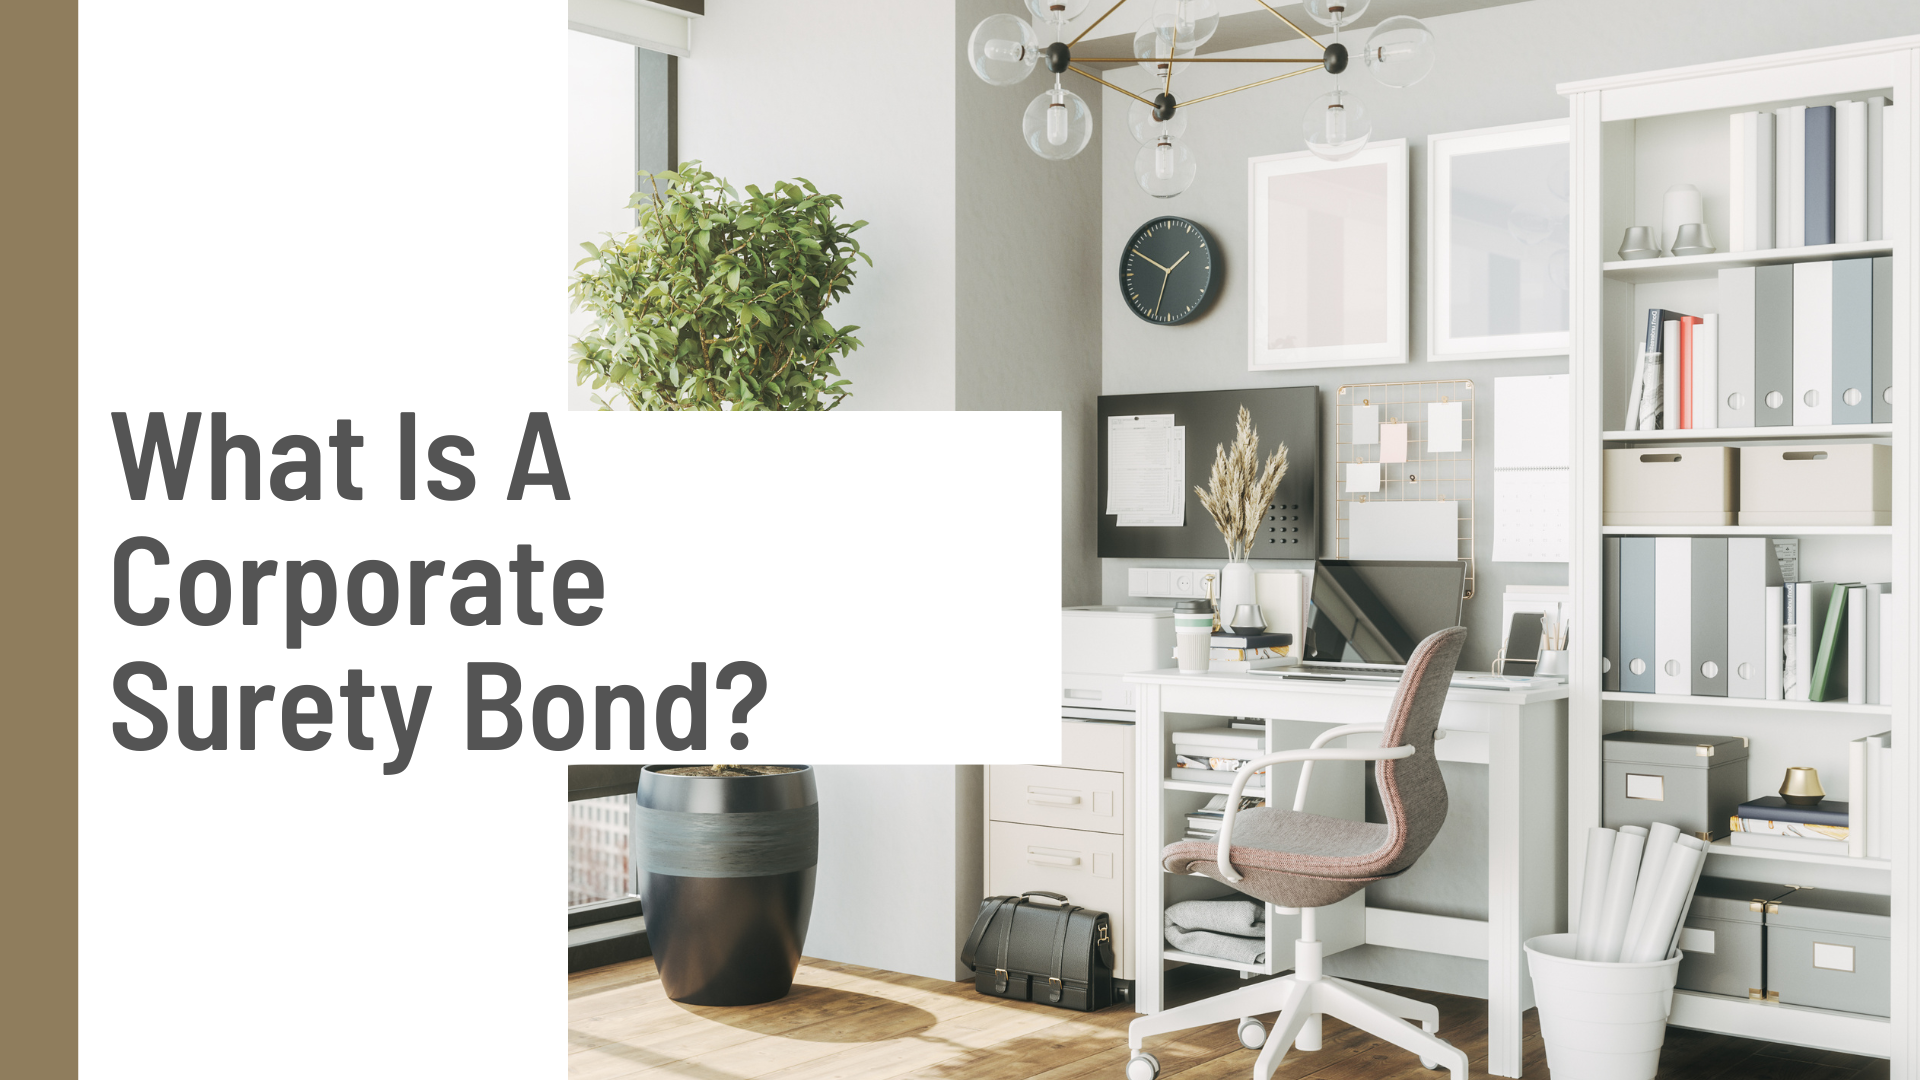 surety bond - What Is A Corporate Surety Bond - modern office setup